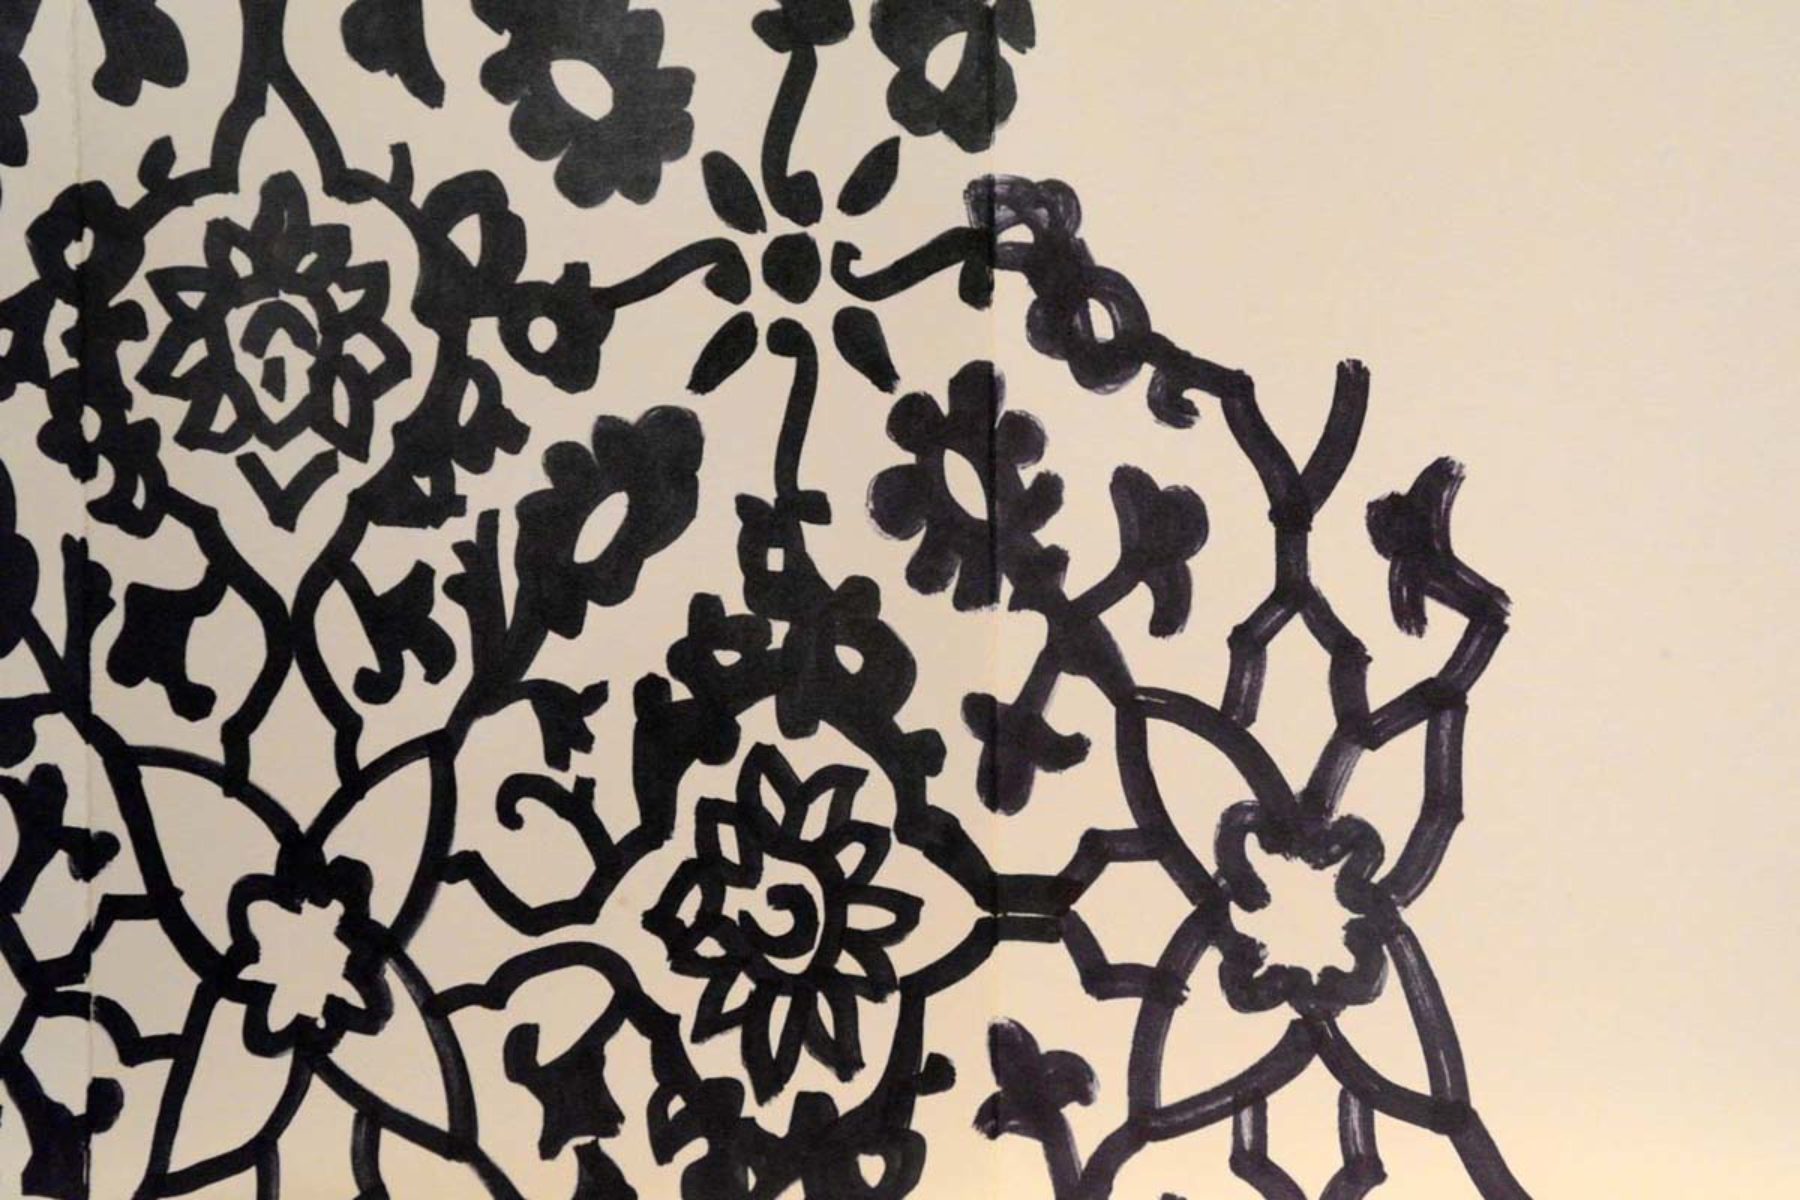 Laura Pozzar, Keep off the grass (pattern #1), 2013, ink on moleskine, 244 x 14.2 cm